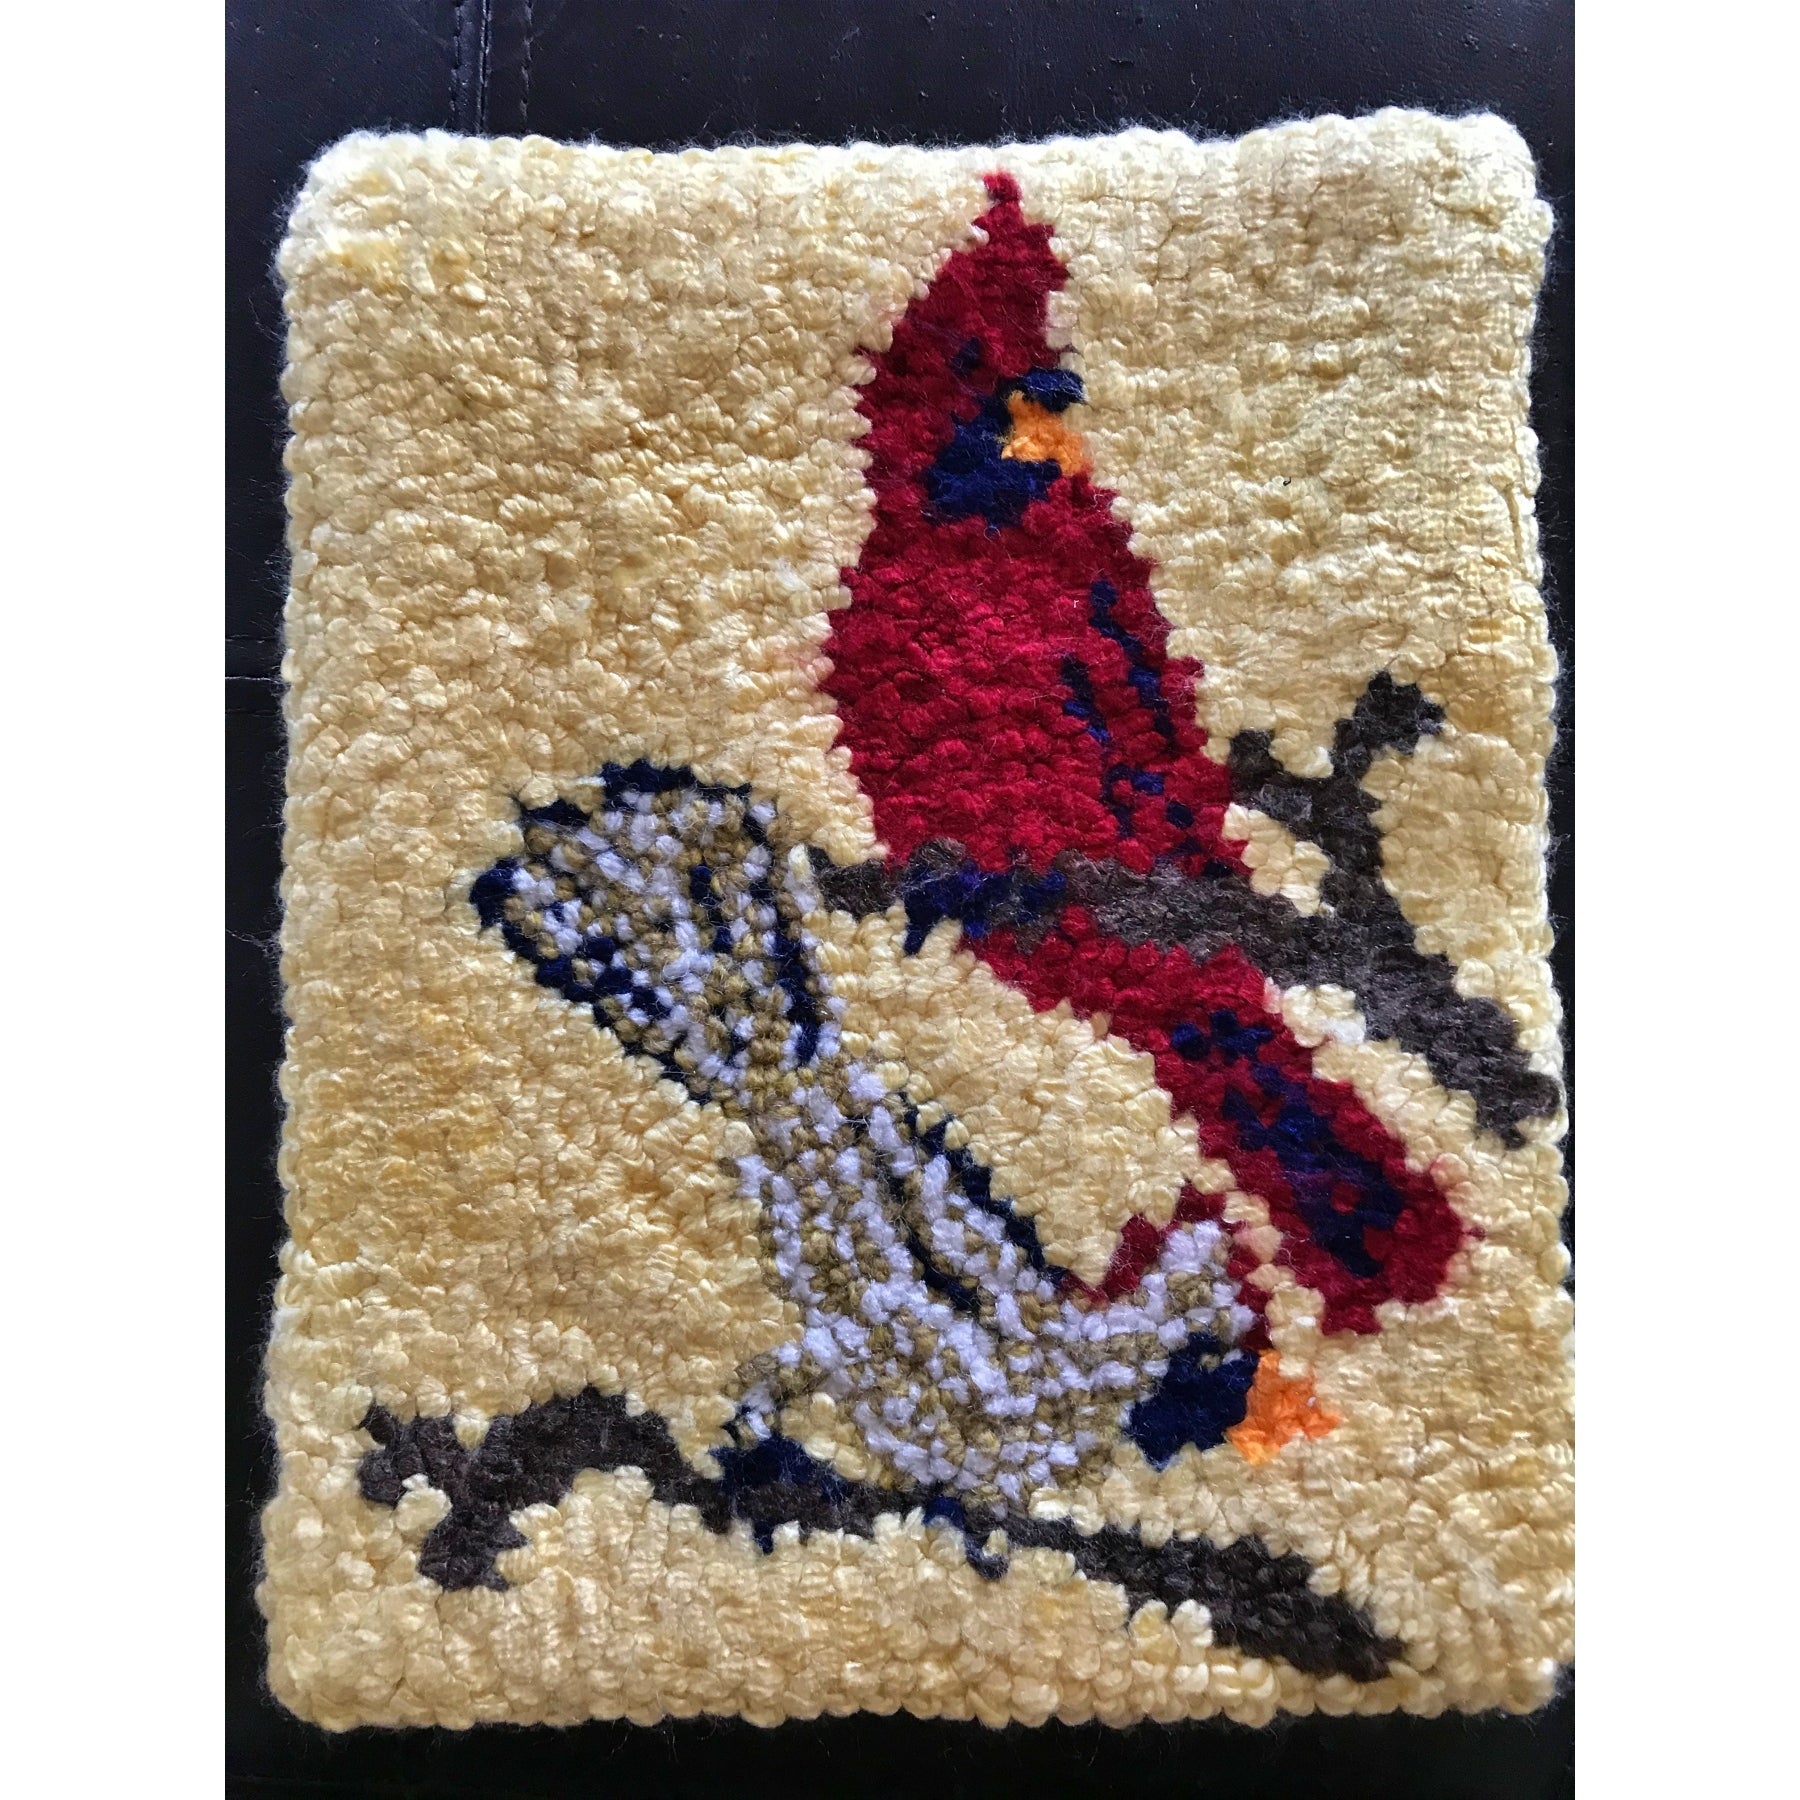 Cardinal, rug hooked by Linda Leaf (punch hooked)